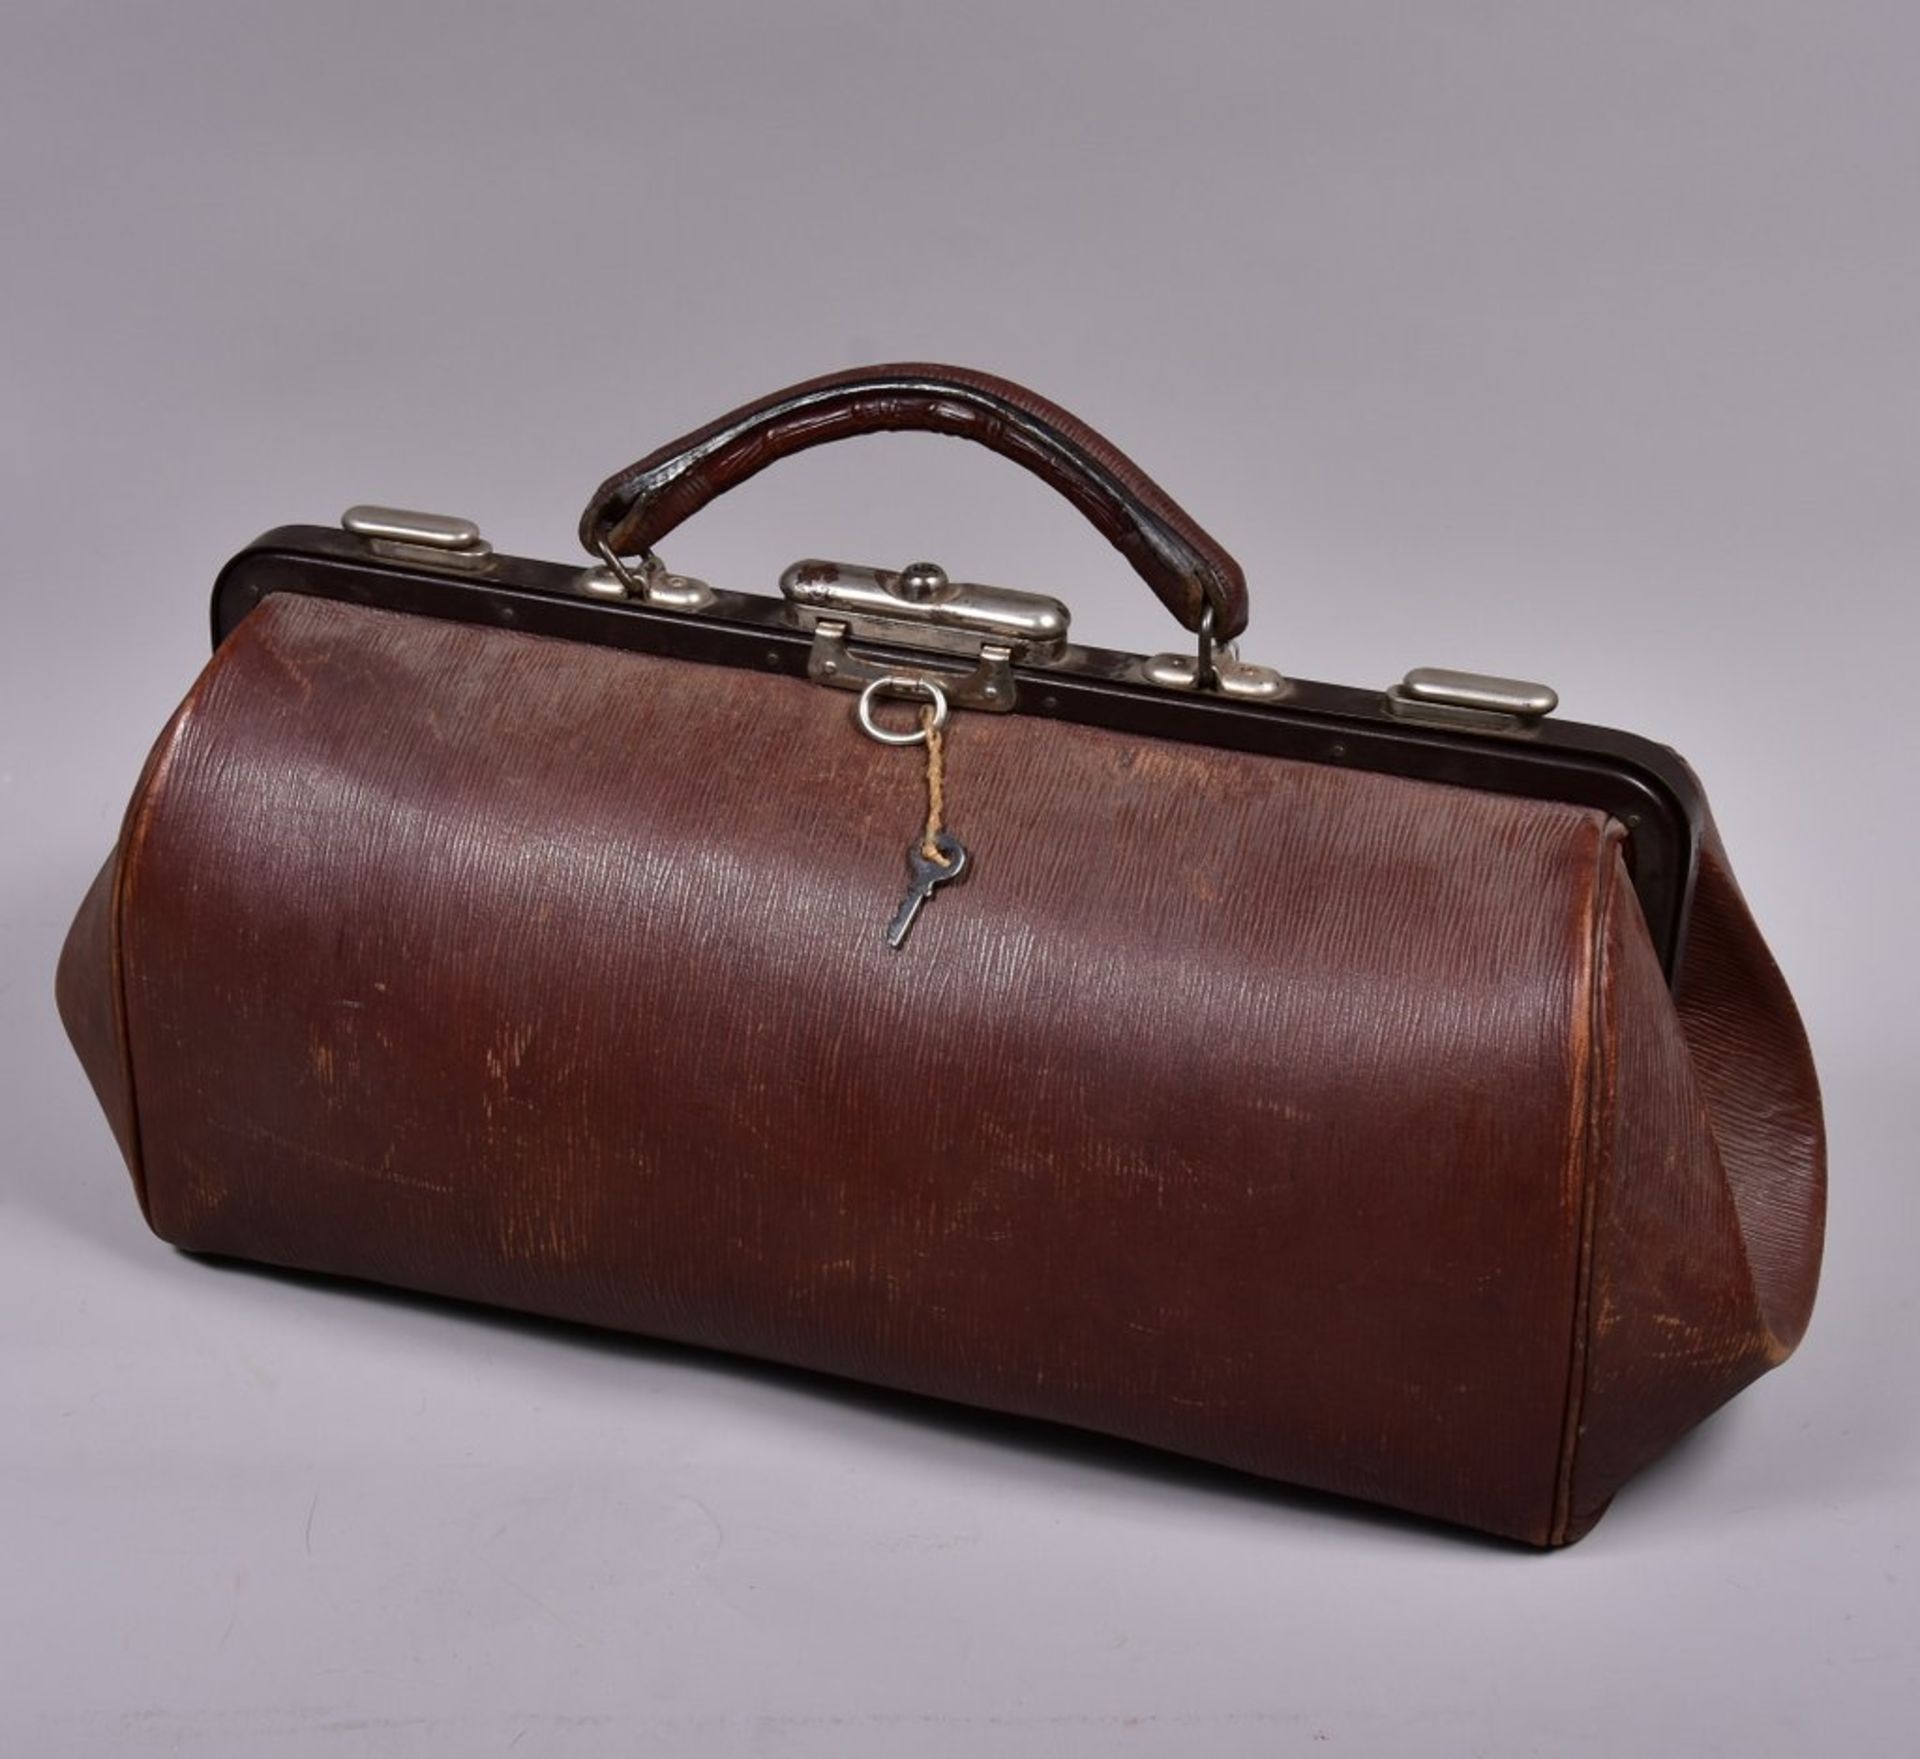 Hebammenkoffer, um 1920, braunes Leder, innen Leinenfutter, verschließbar, Schlüssel vorhanden,